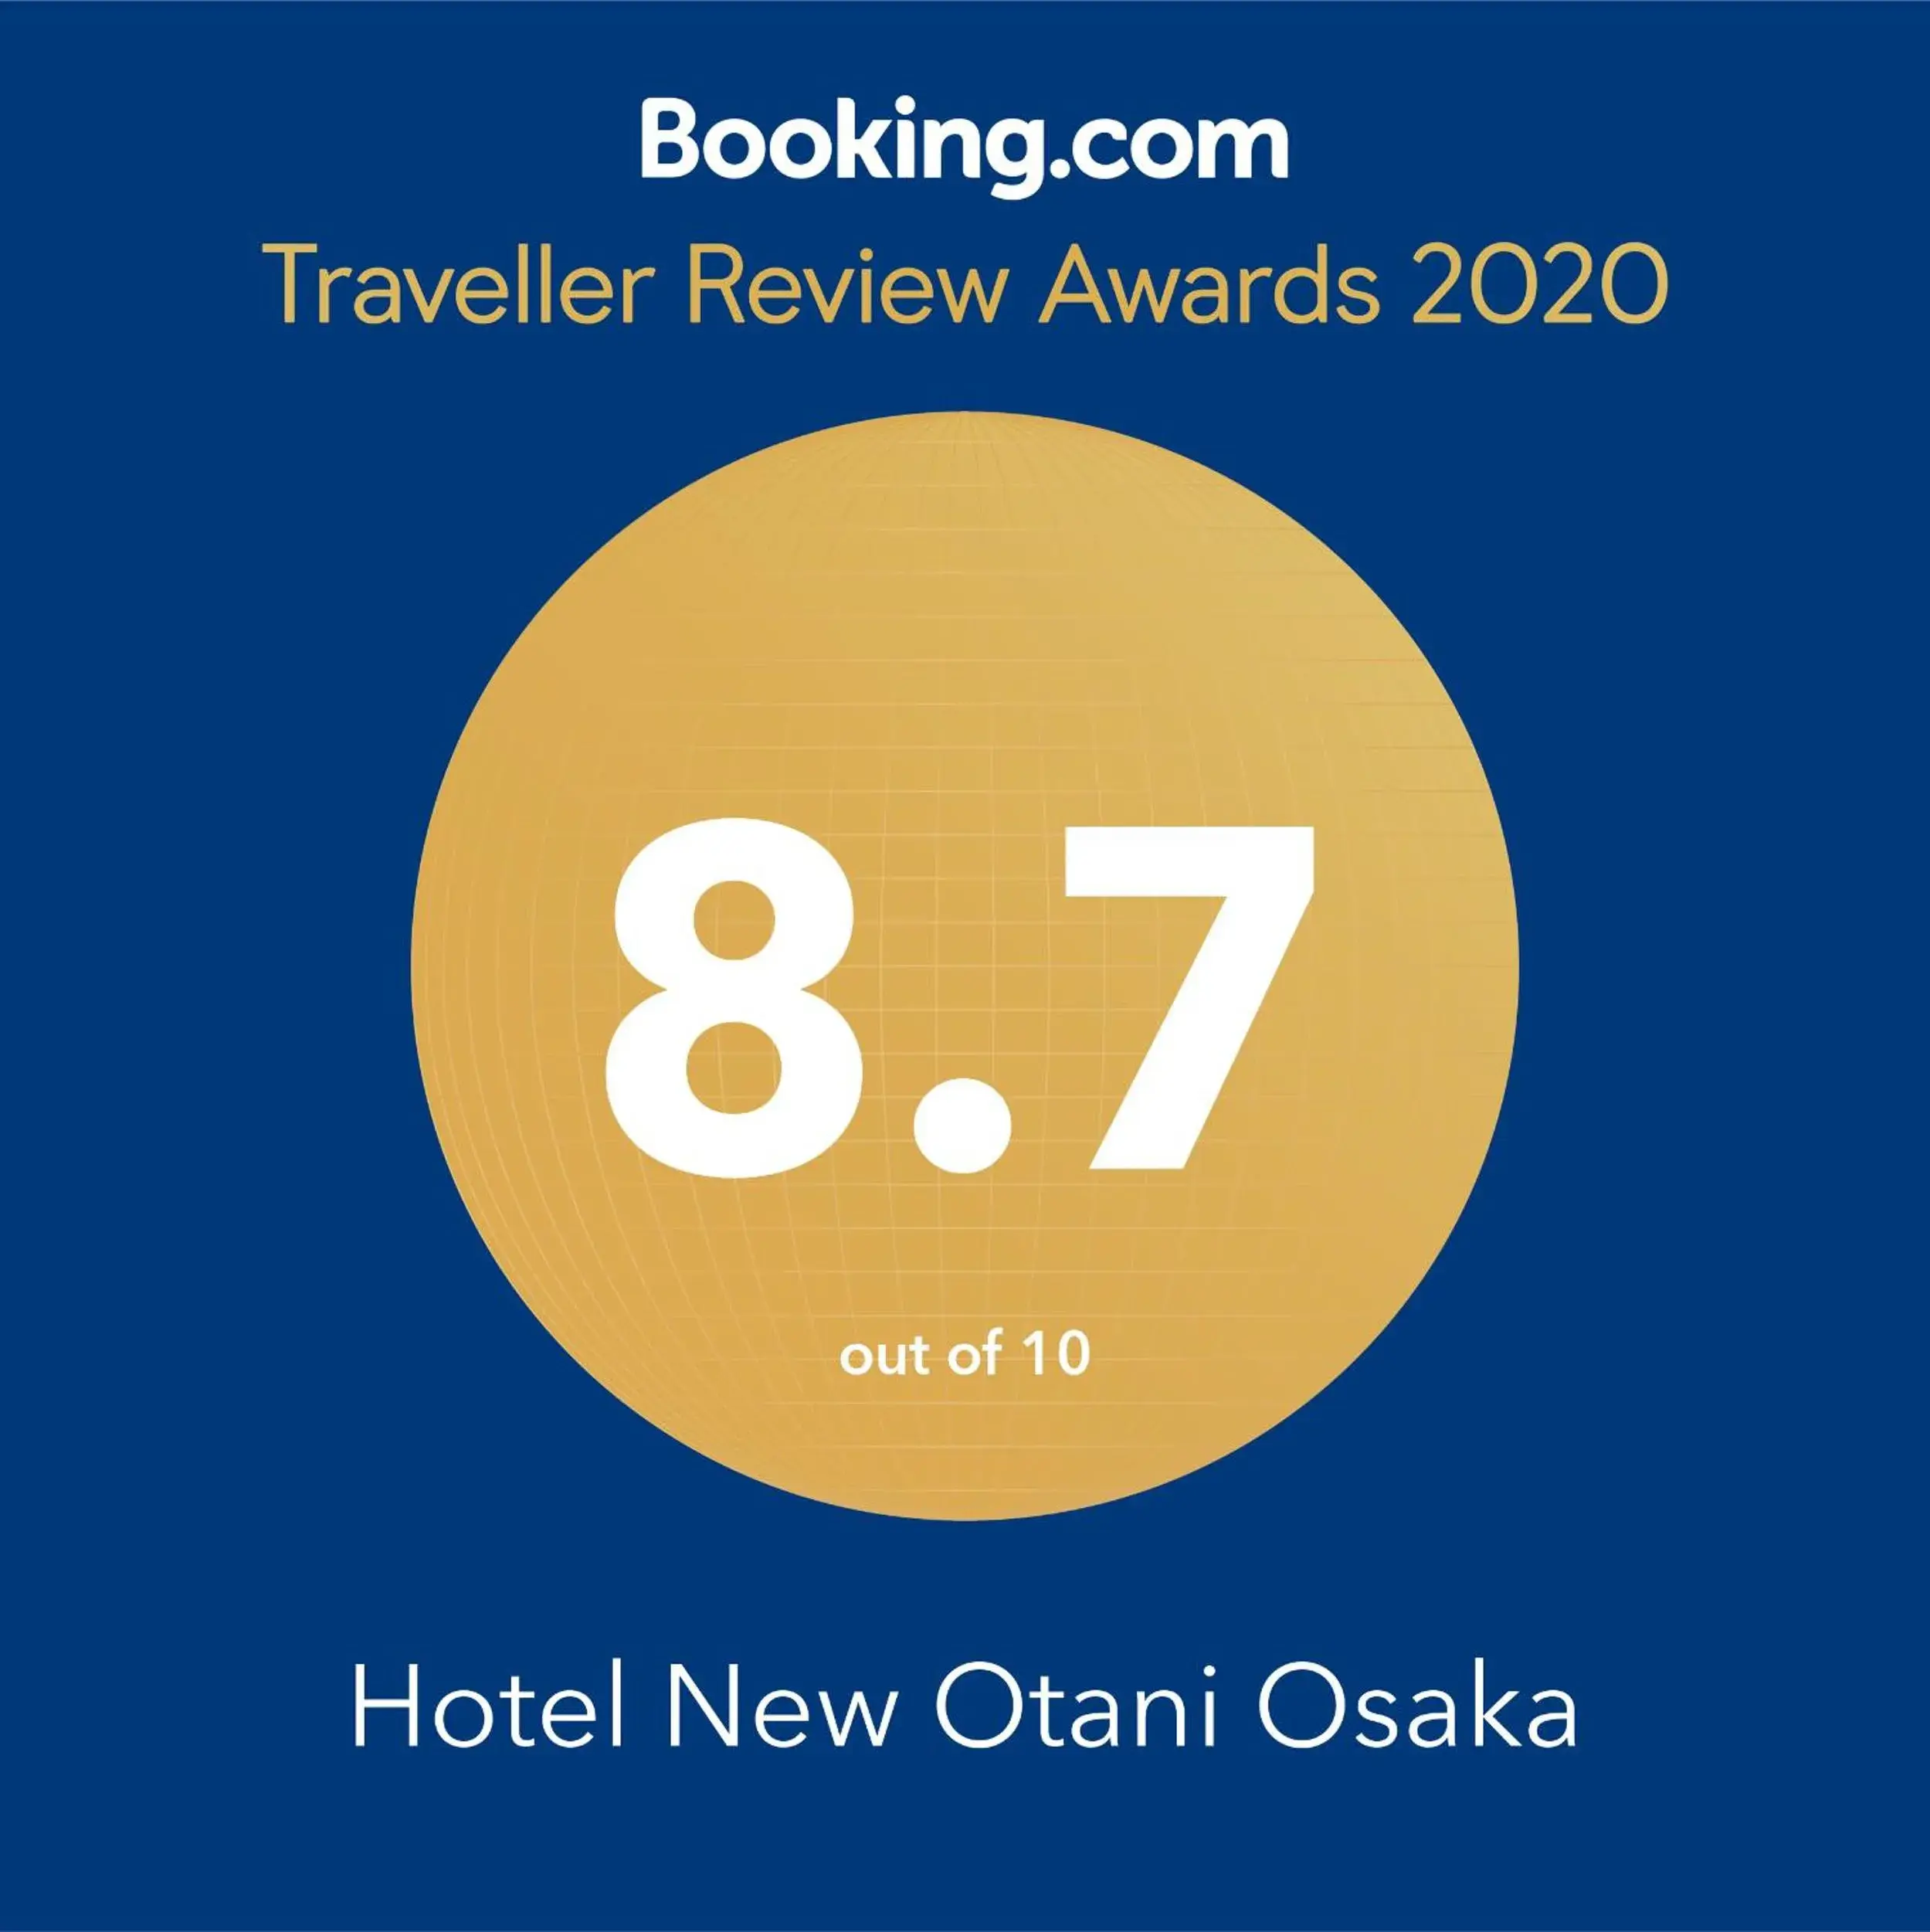 Certificate/Award in Hotel New Otani Osaka